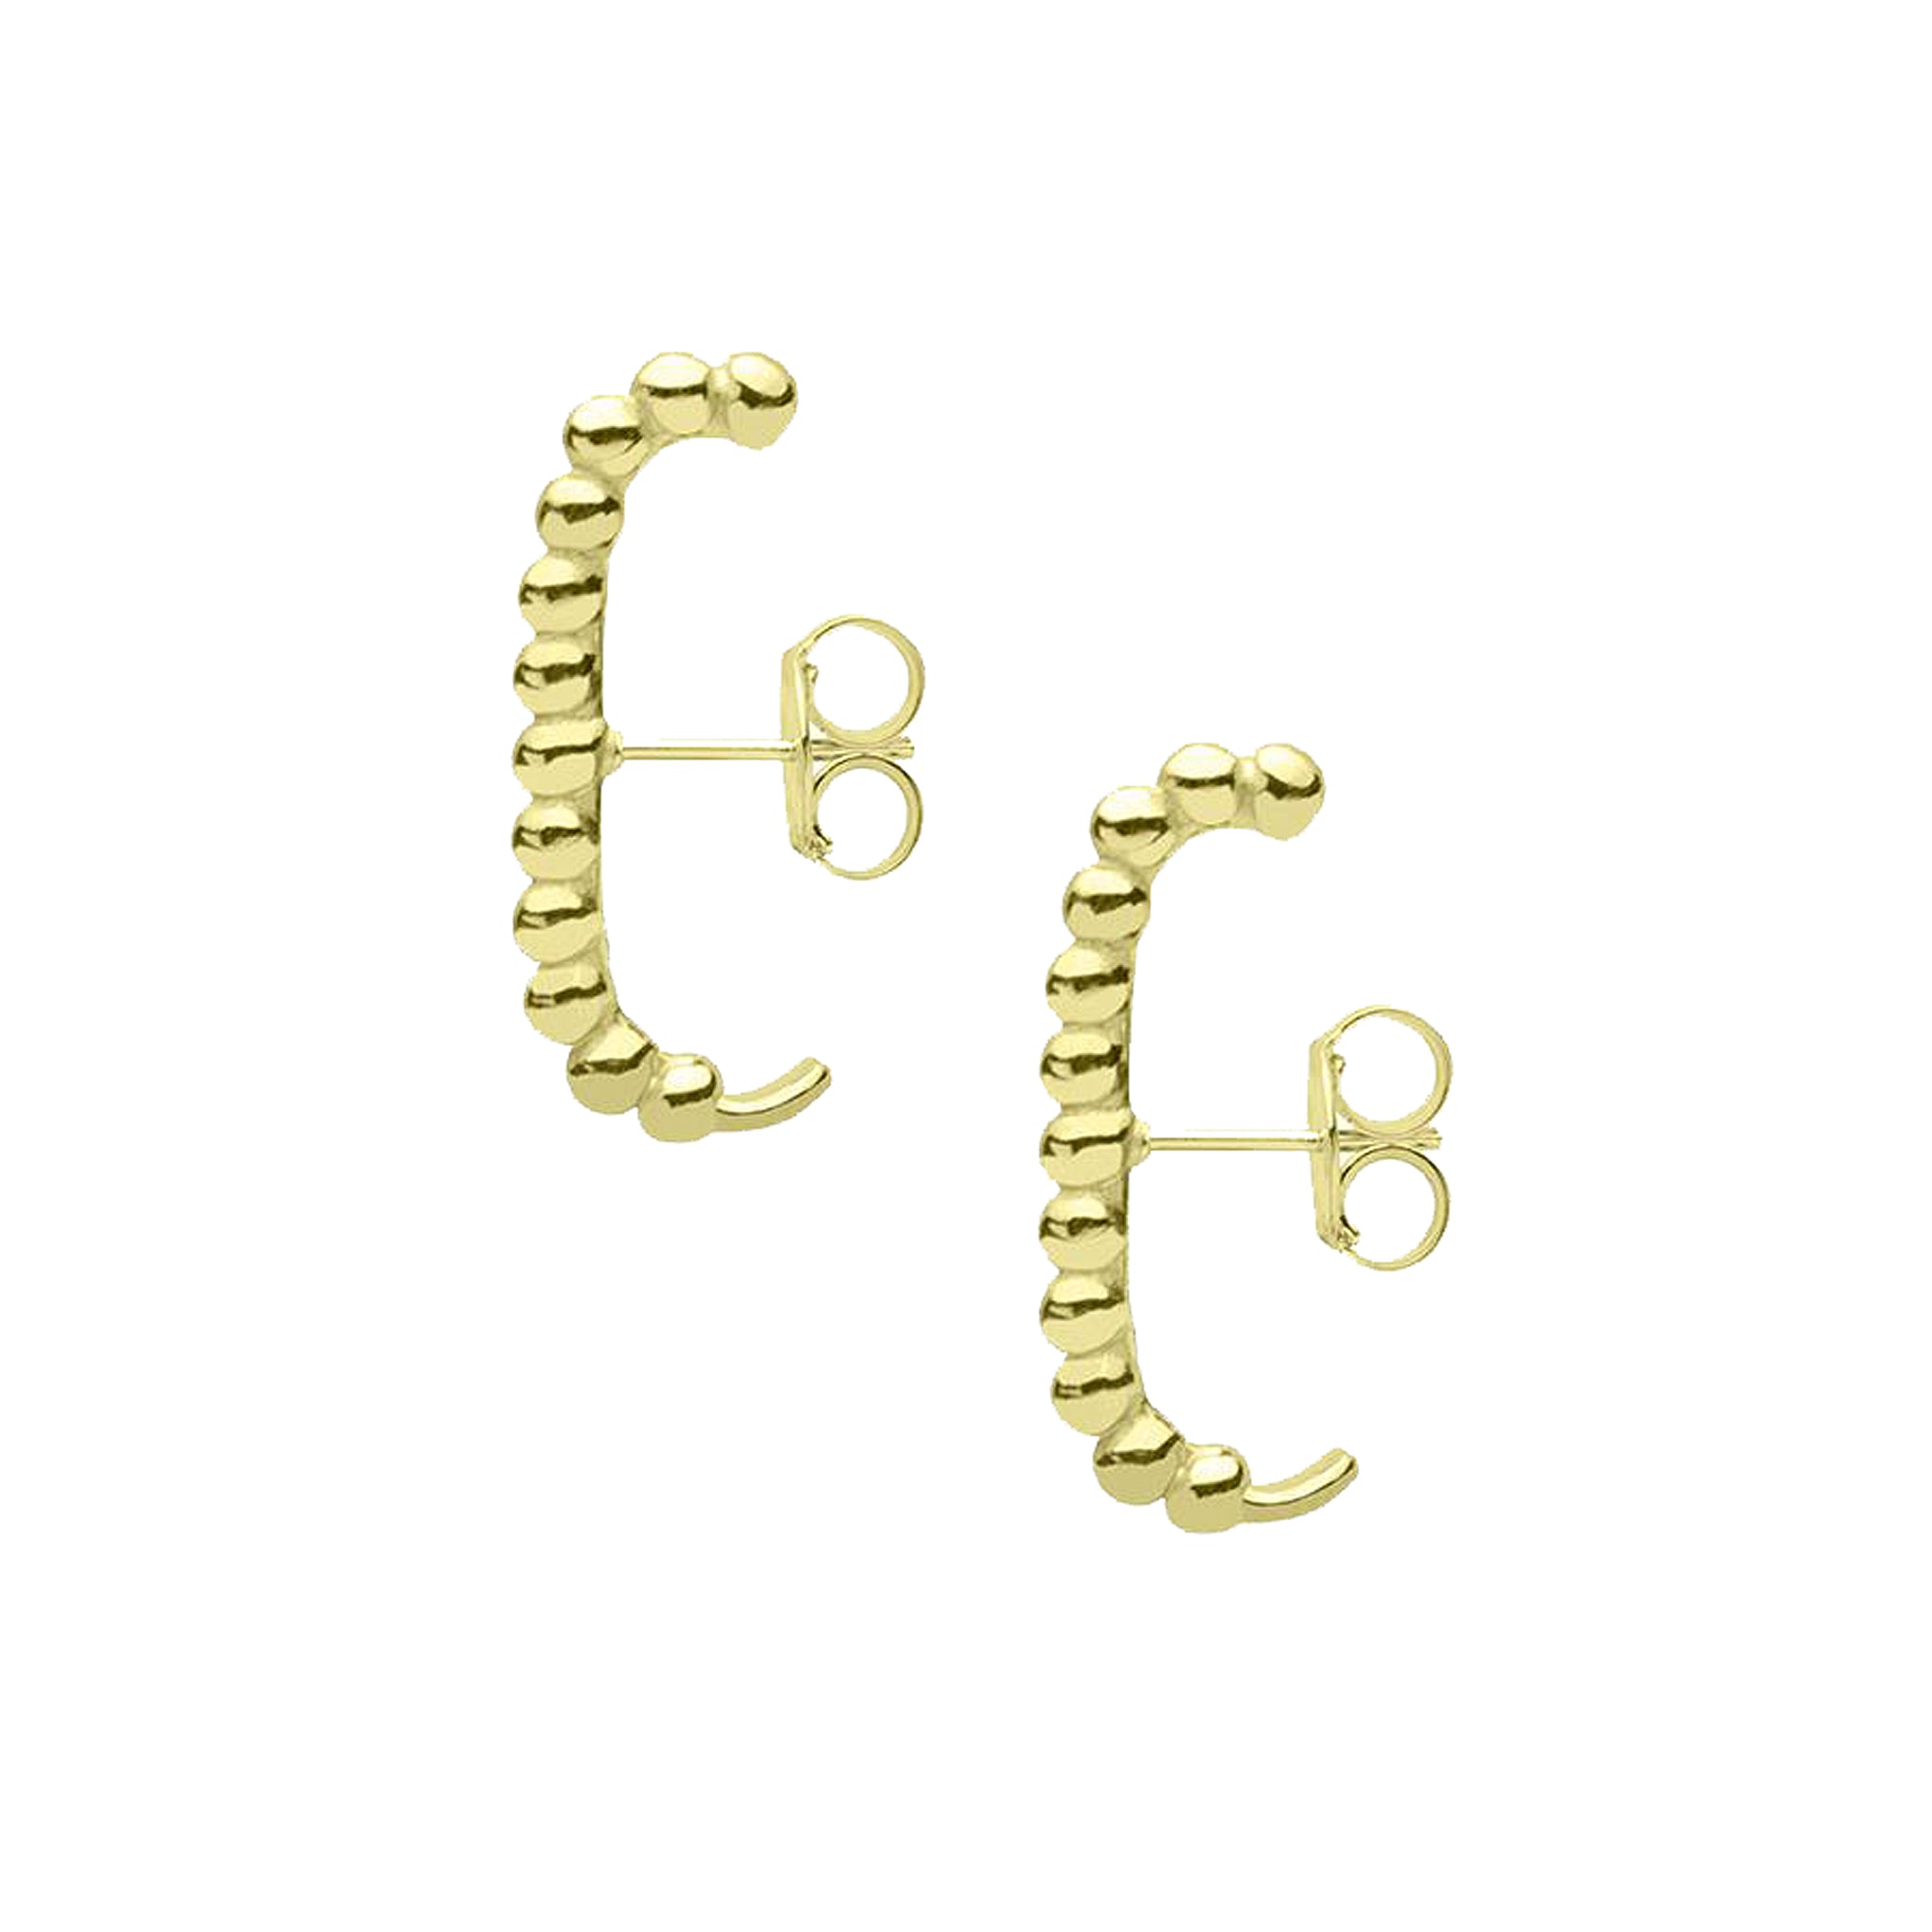 Sheila Fajl Benny Hug Ear Cuff Stud Earrings in Polished Gold Plated